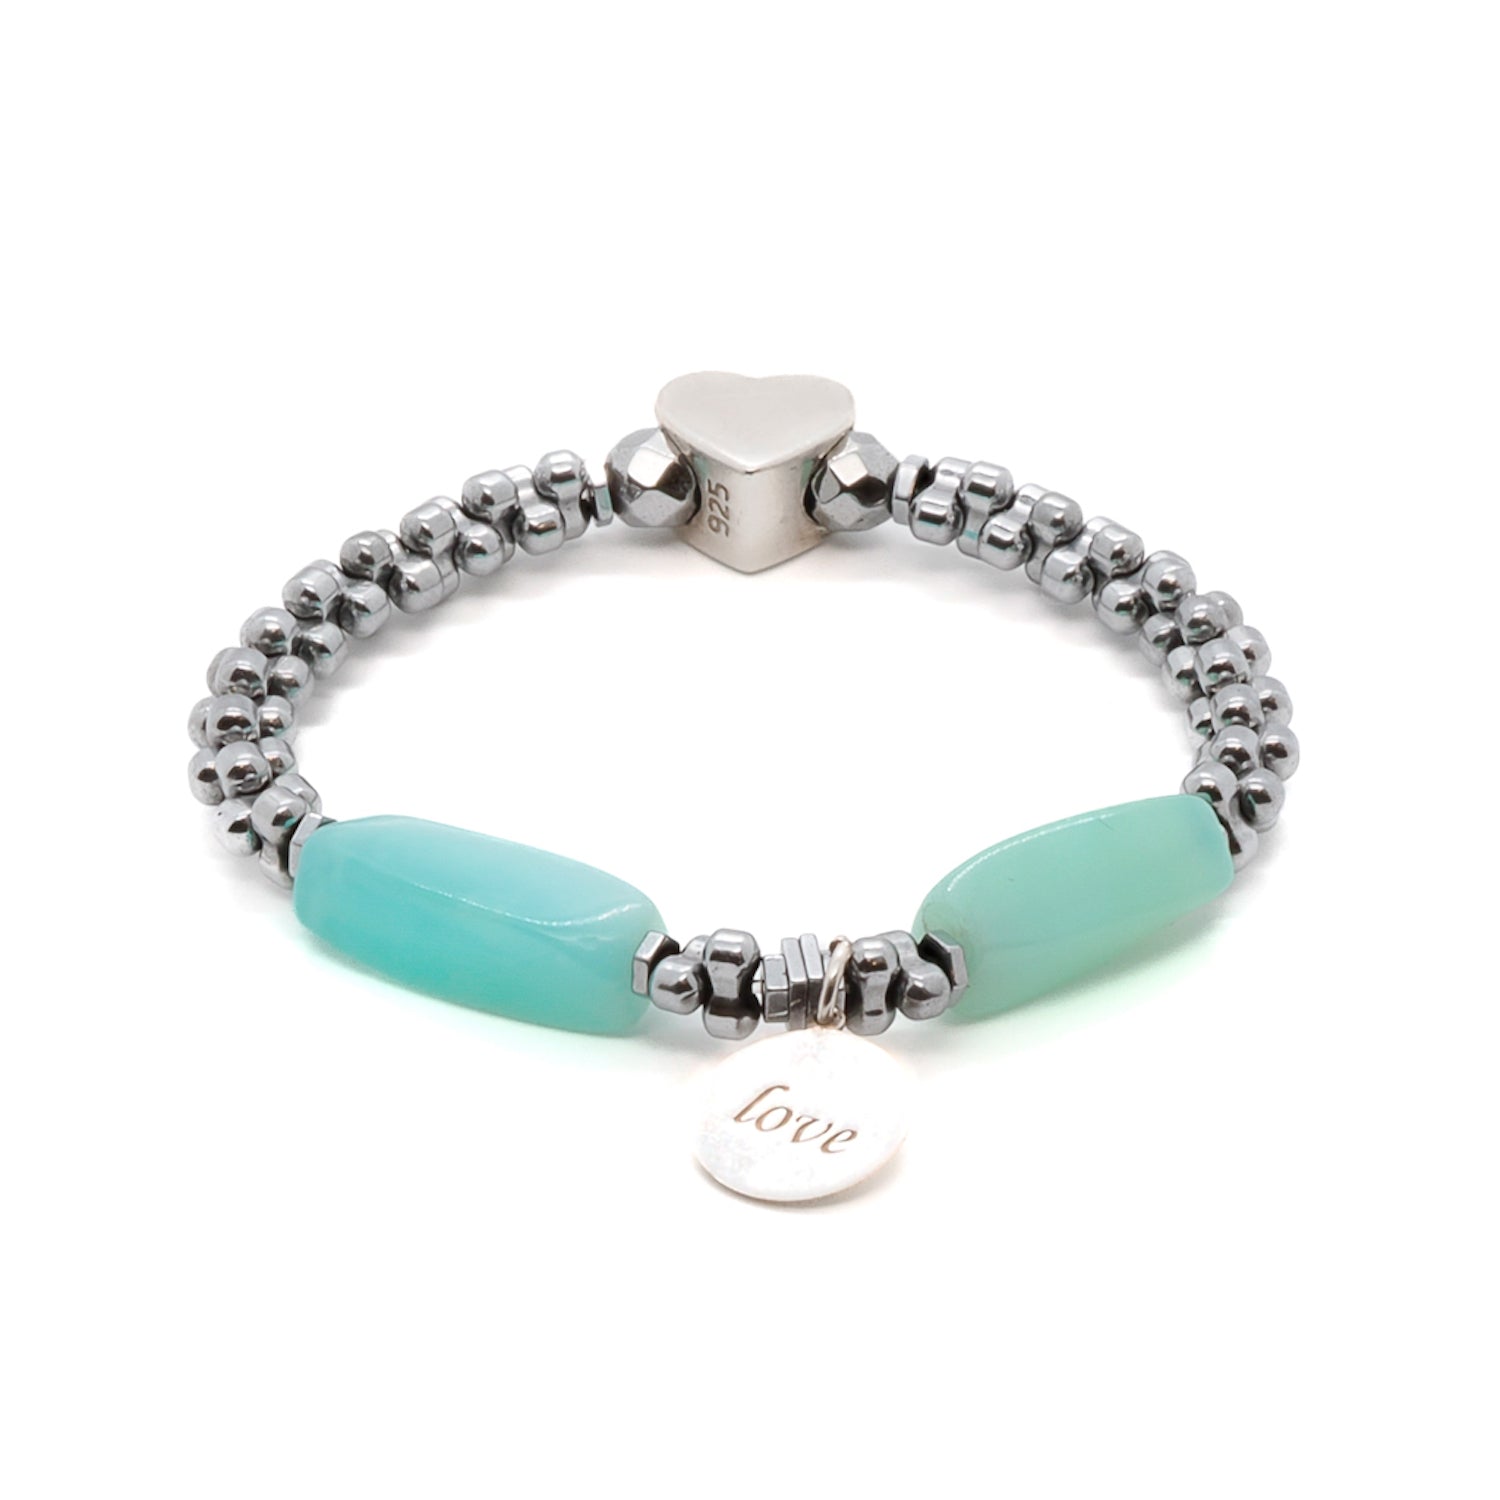 Handmade Aquamarine Bracelet with Love Charm and Protective Hematite Stones